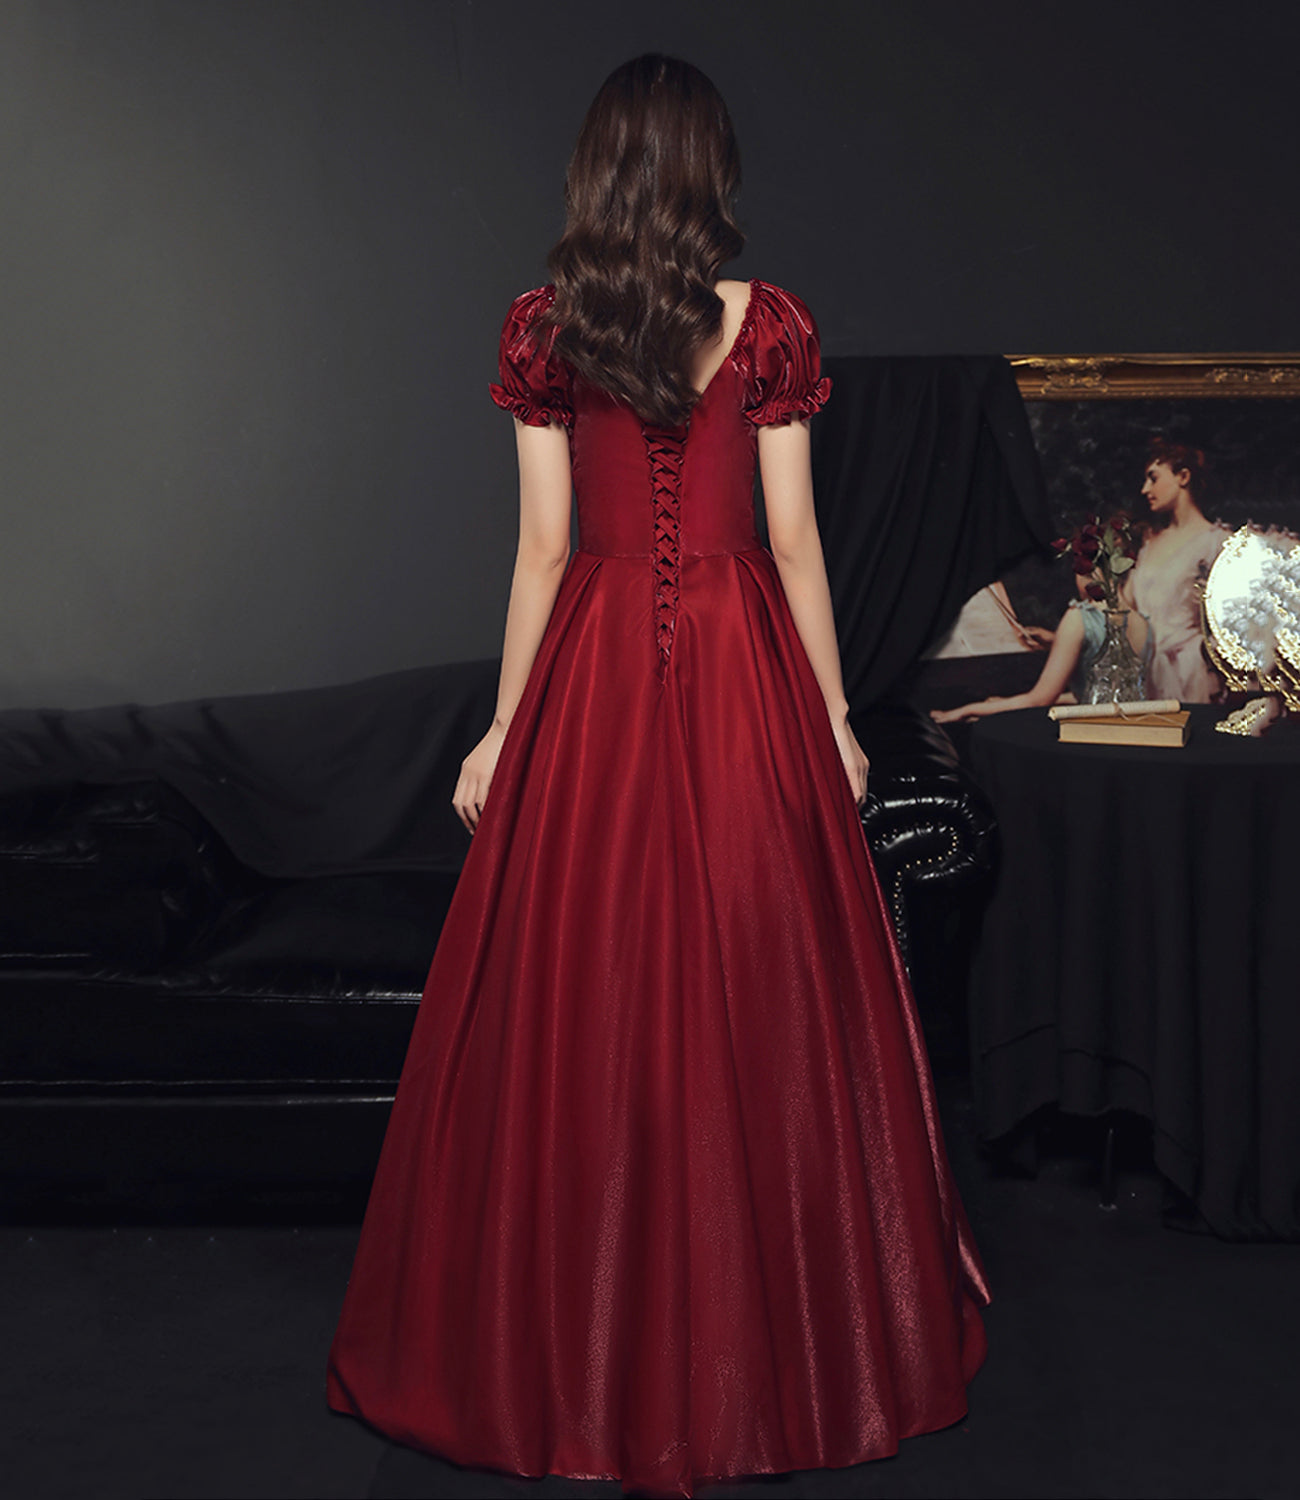 Burgundy satin long prom dress A line evening gown  10502